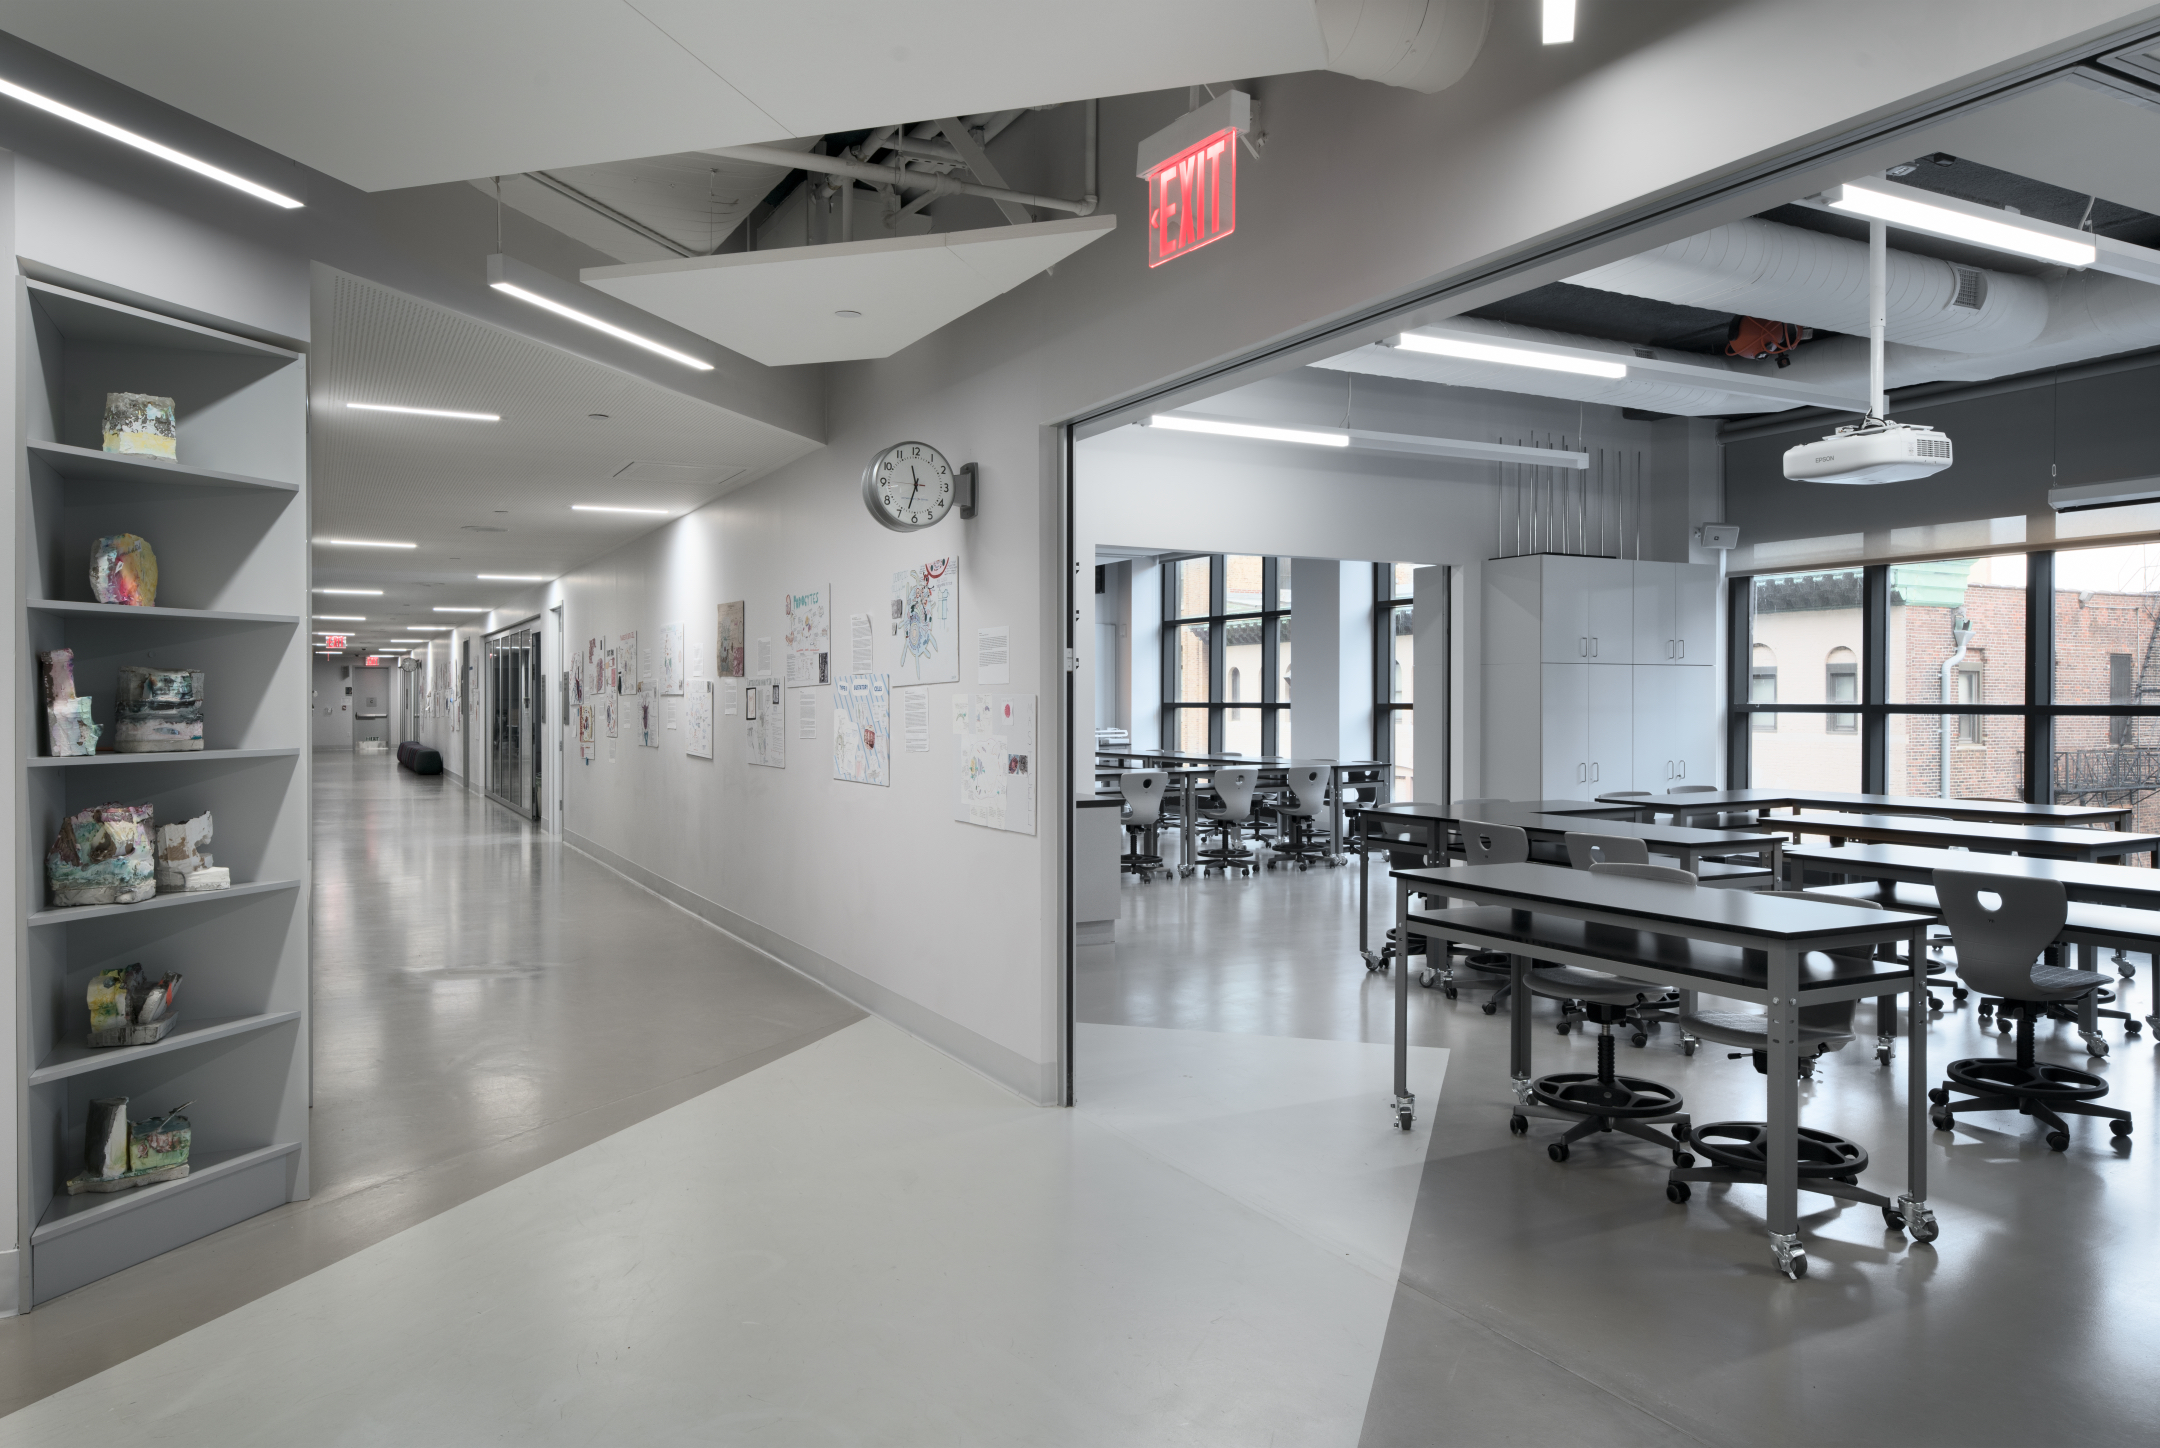 New York Upper School STEAM Classroom &amp; Corridor